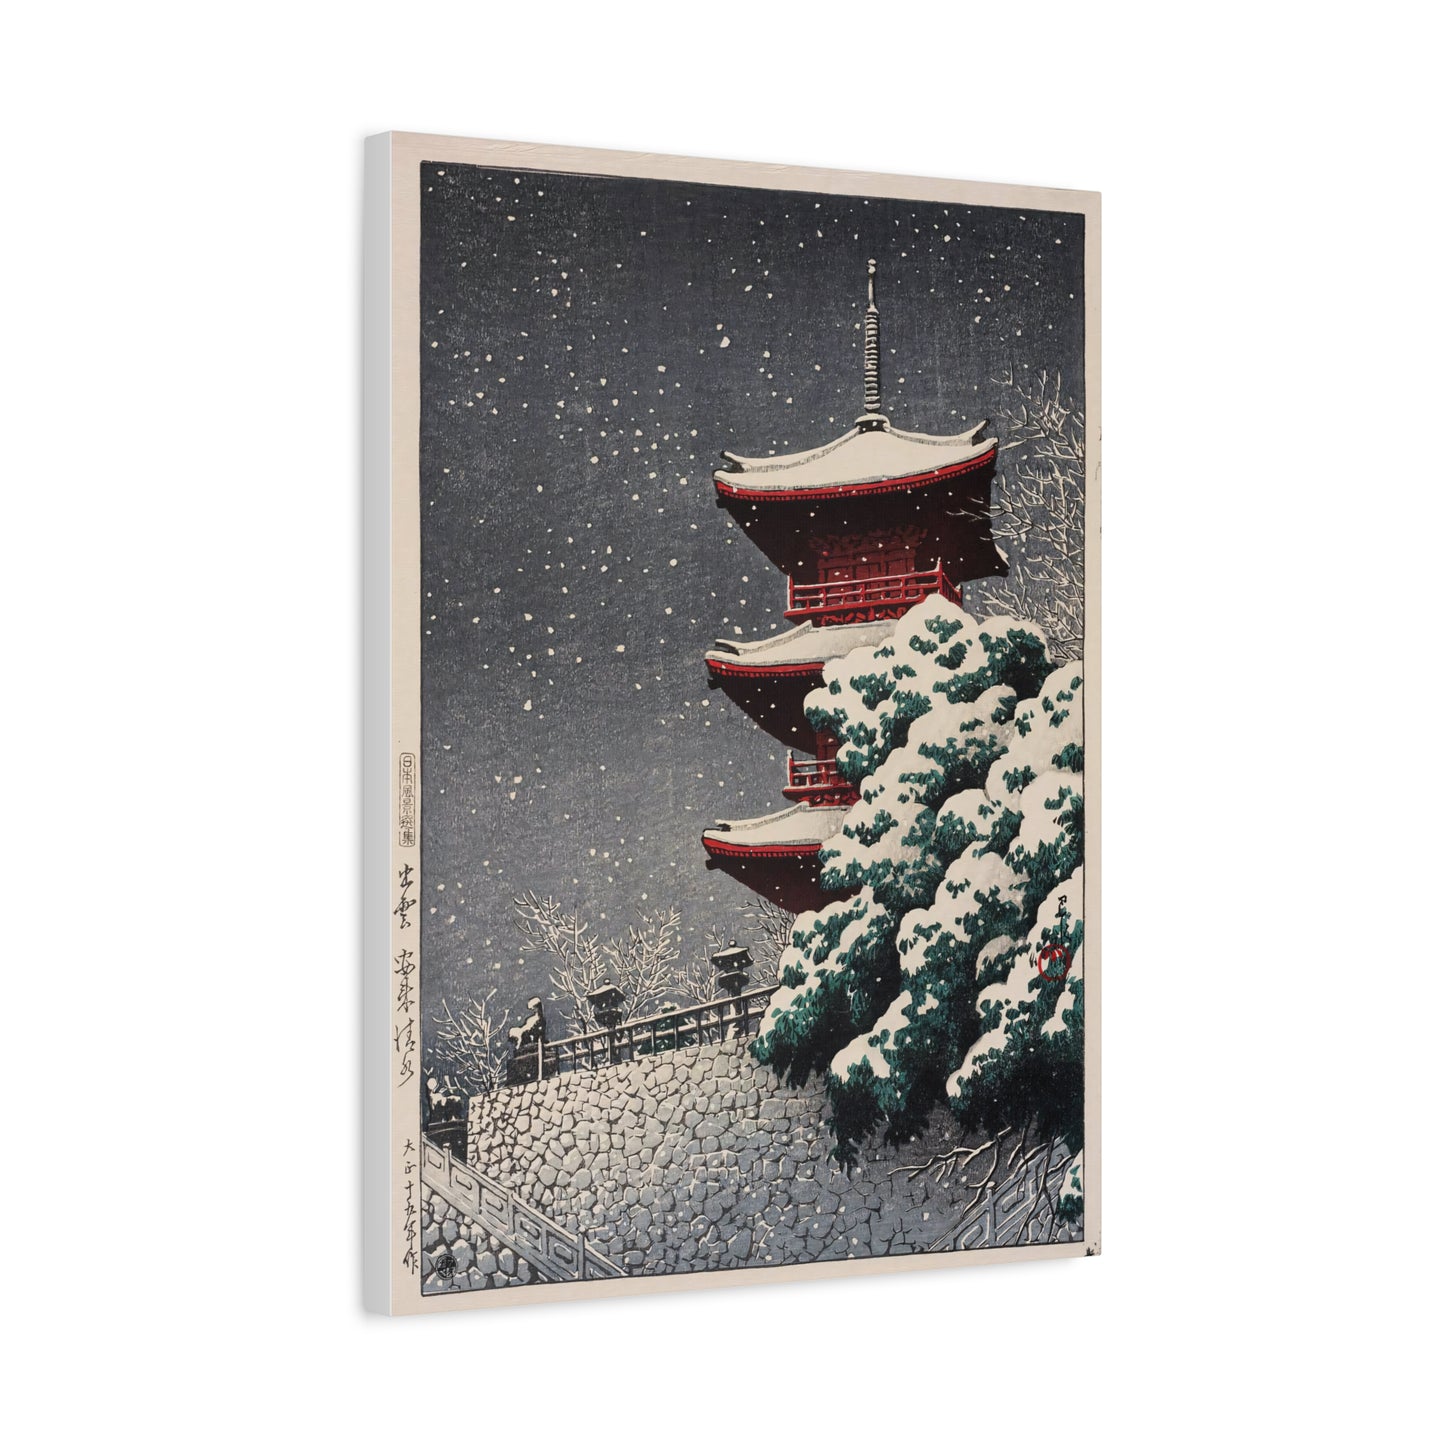 Selection of Scenes from Japan: Yasugi Kiyomizu Temple, Izumo Province - Kawase Hasui